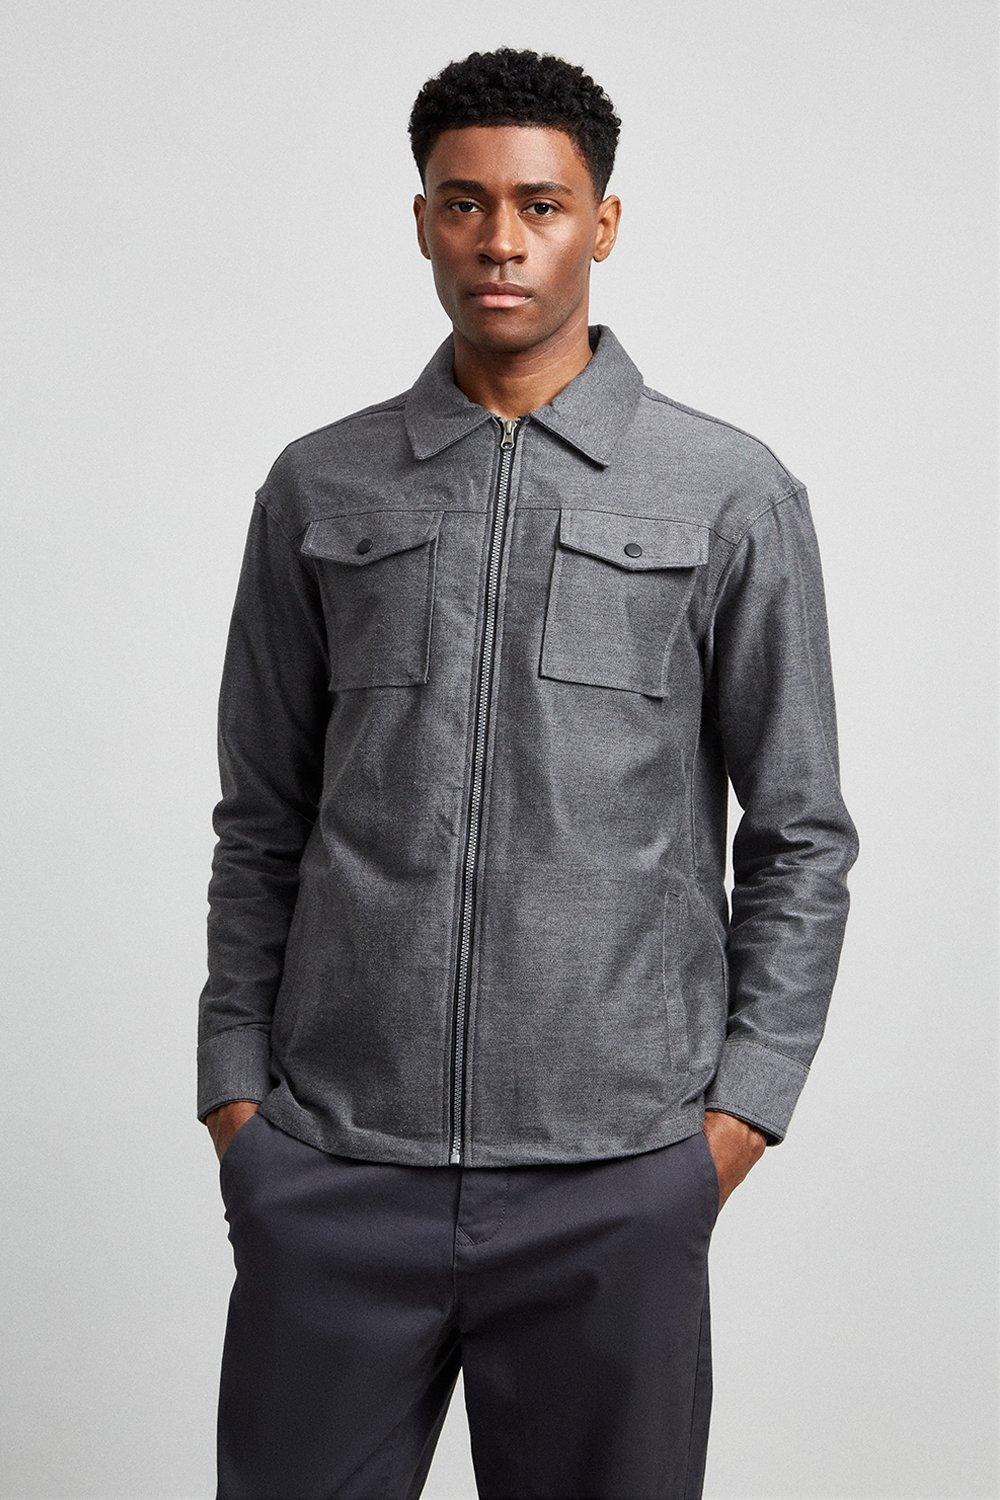 Jackets & Coats | Grey Smart Shacket | Burton